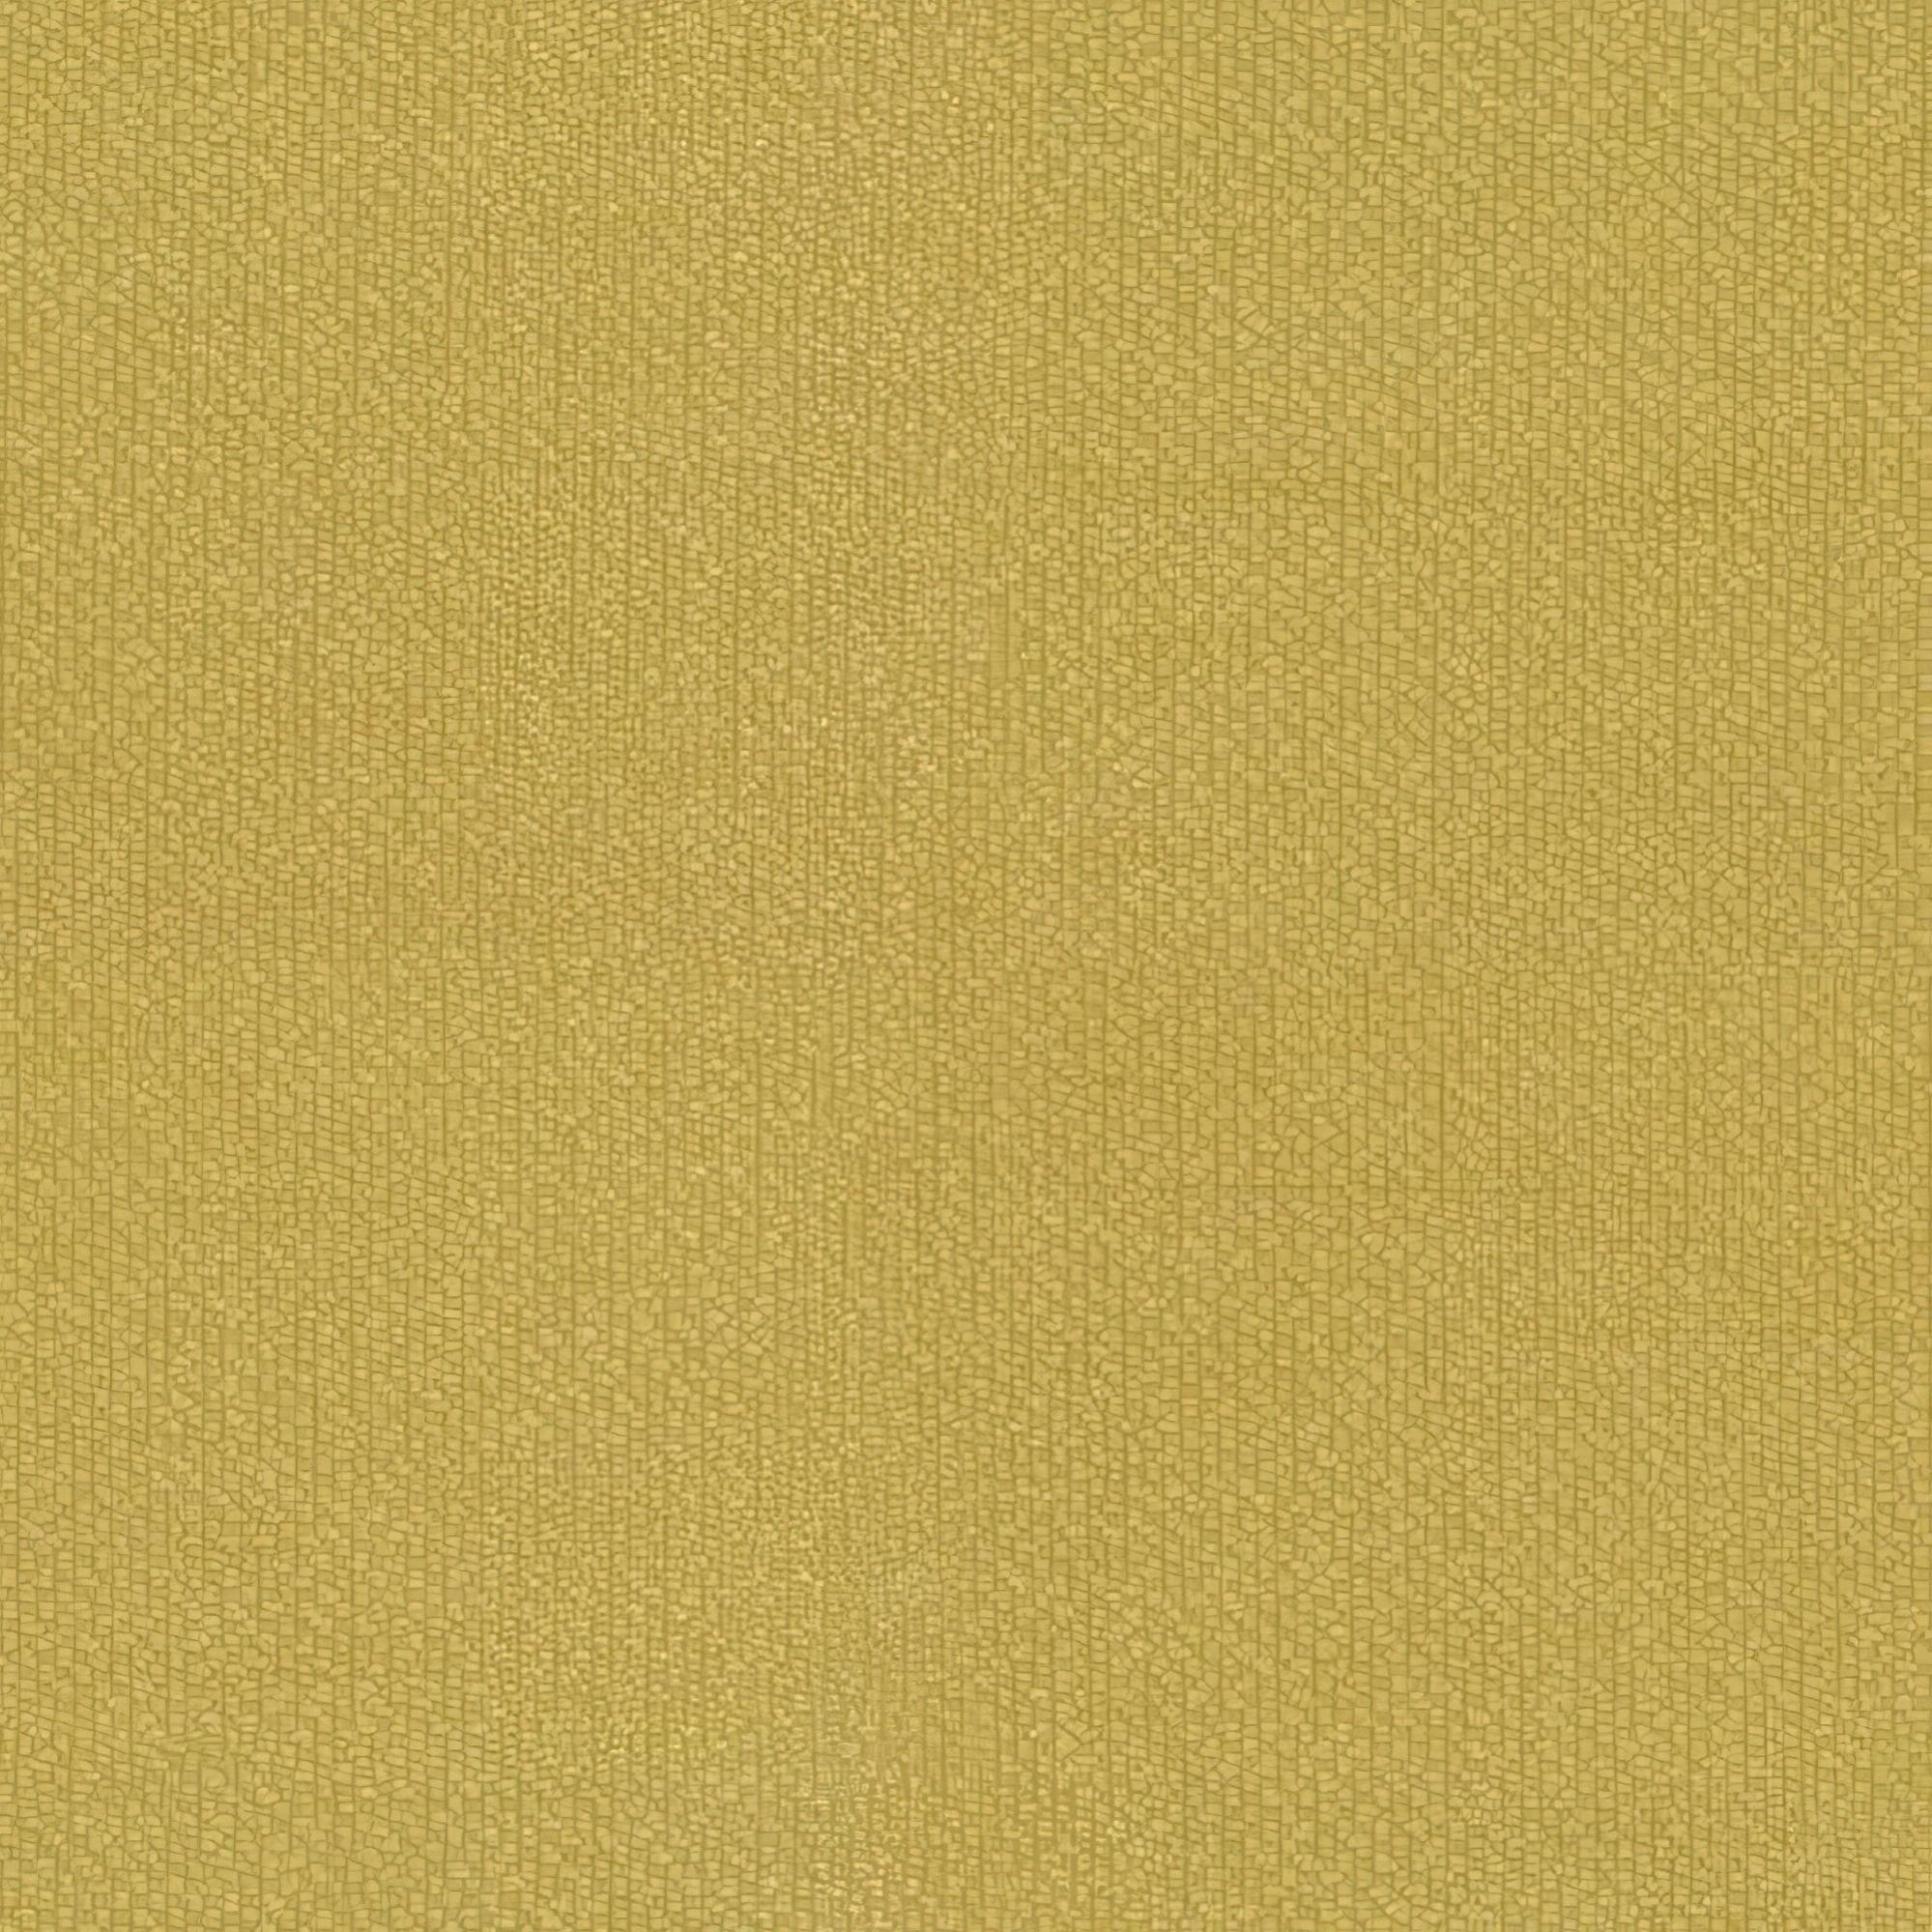 Tela al corte tapicería loneta baracoa mostaza ancho 140 cm